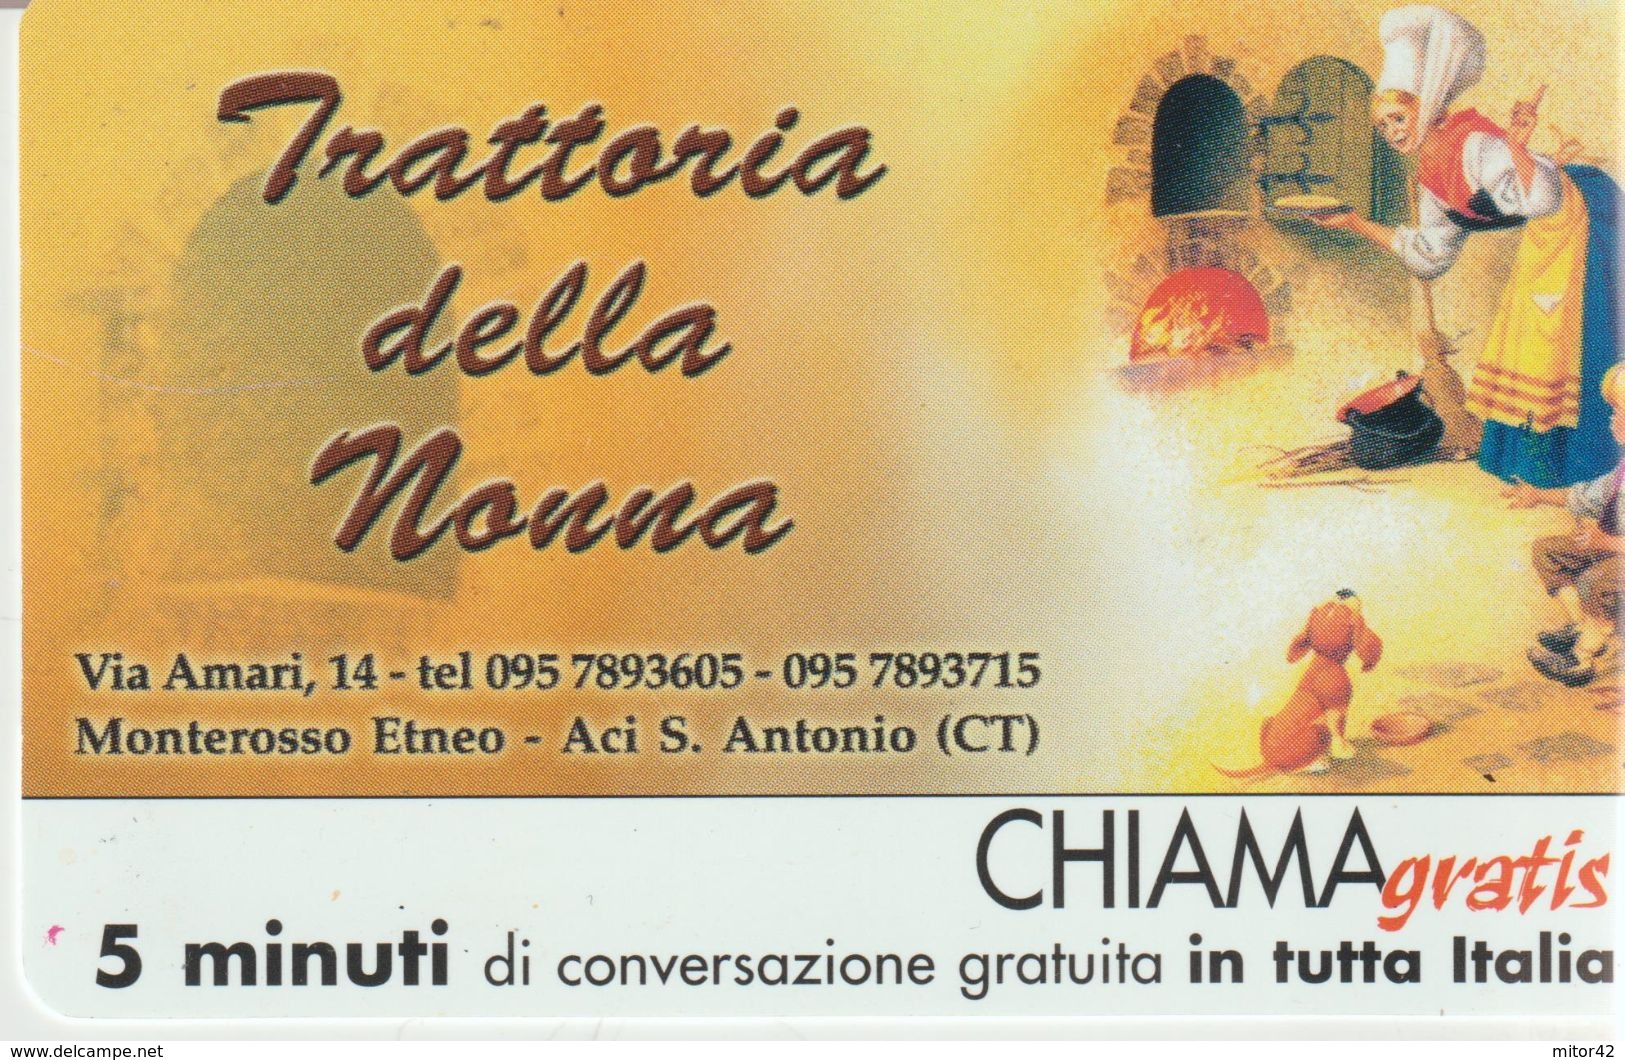 60-Chiama-gratis-Trattoria Della Nonna-Monterosso Etneo-Aci S.Antonio-Catania-Nuova - Speciaal Gebruik